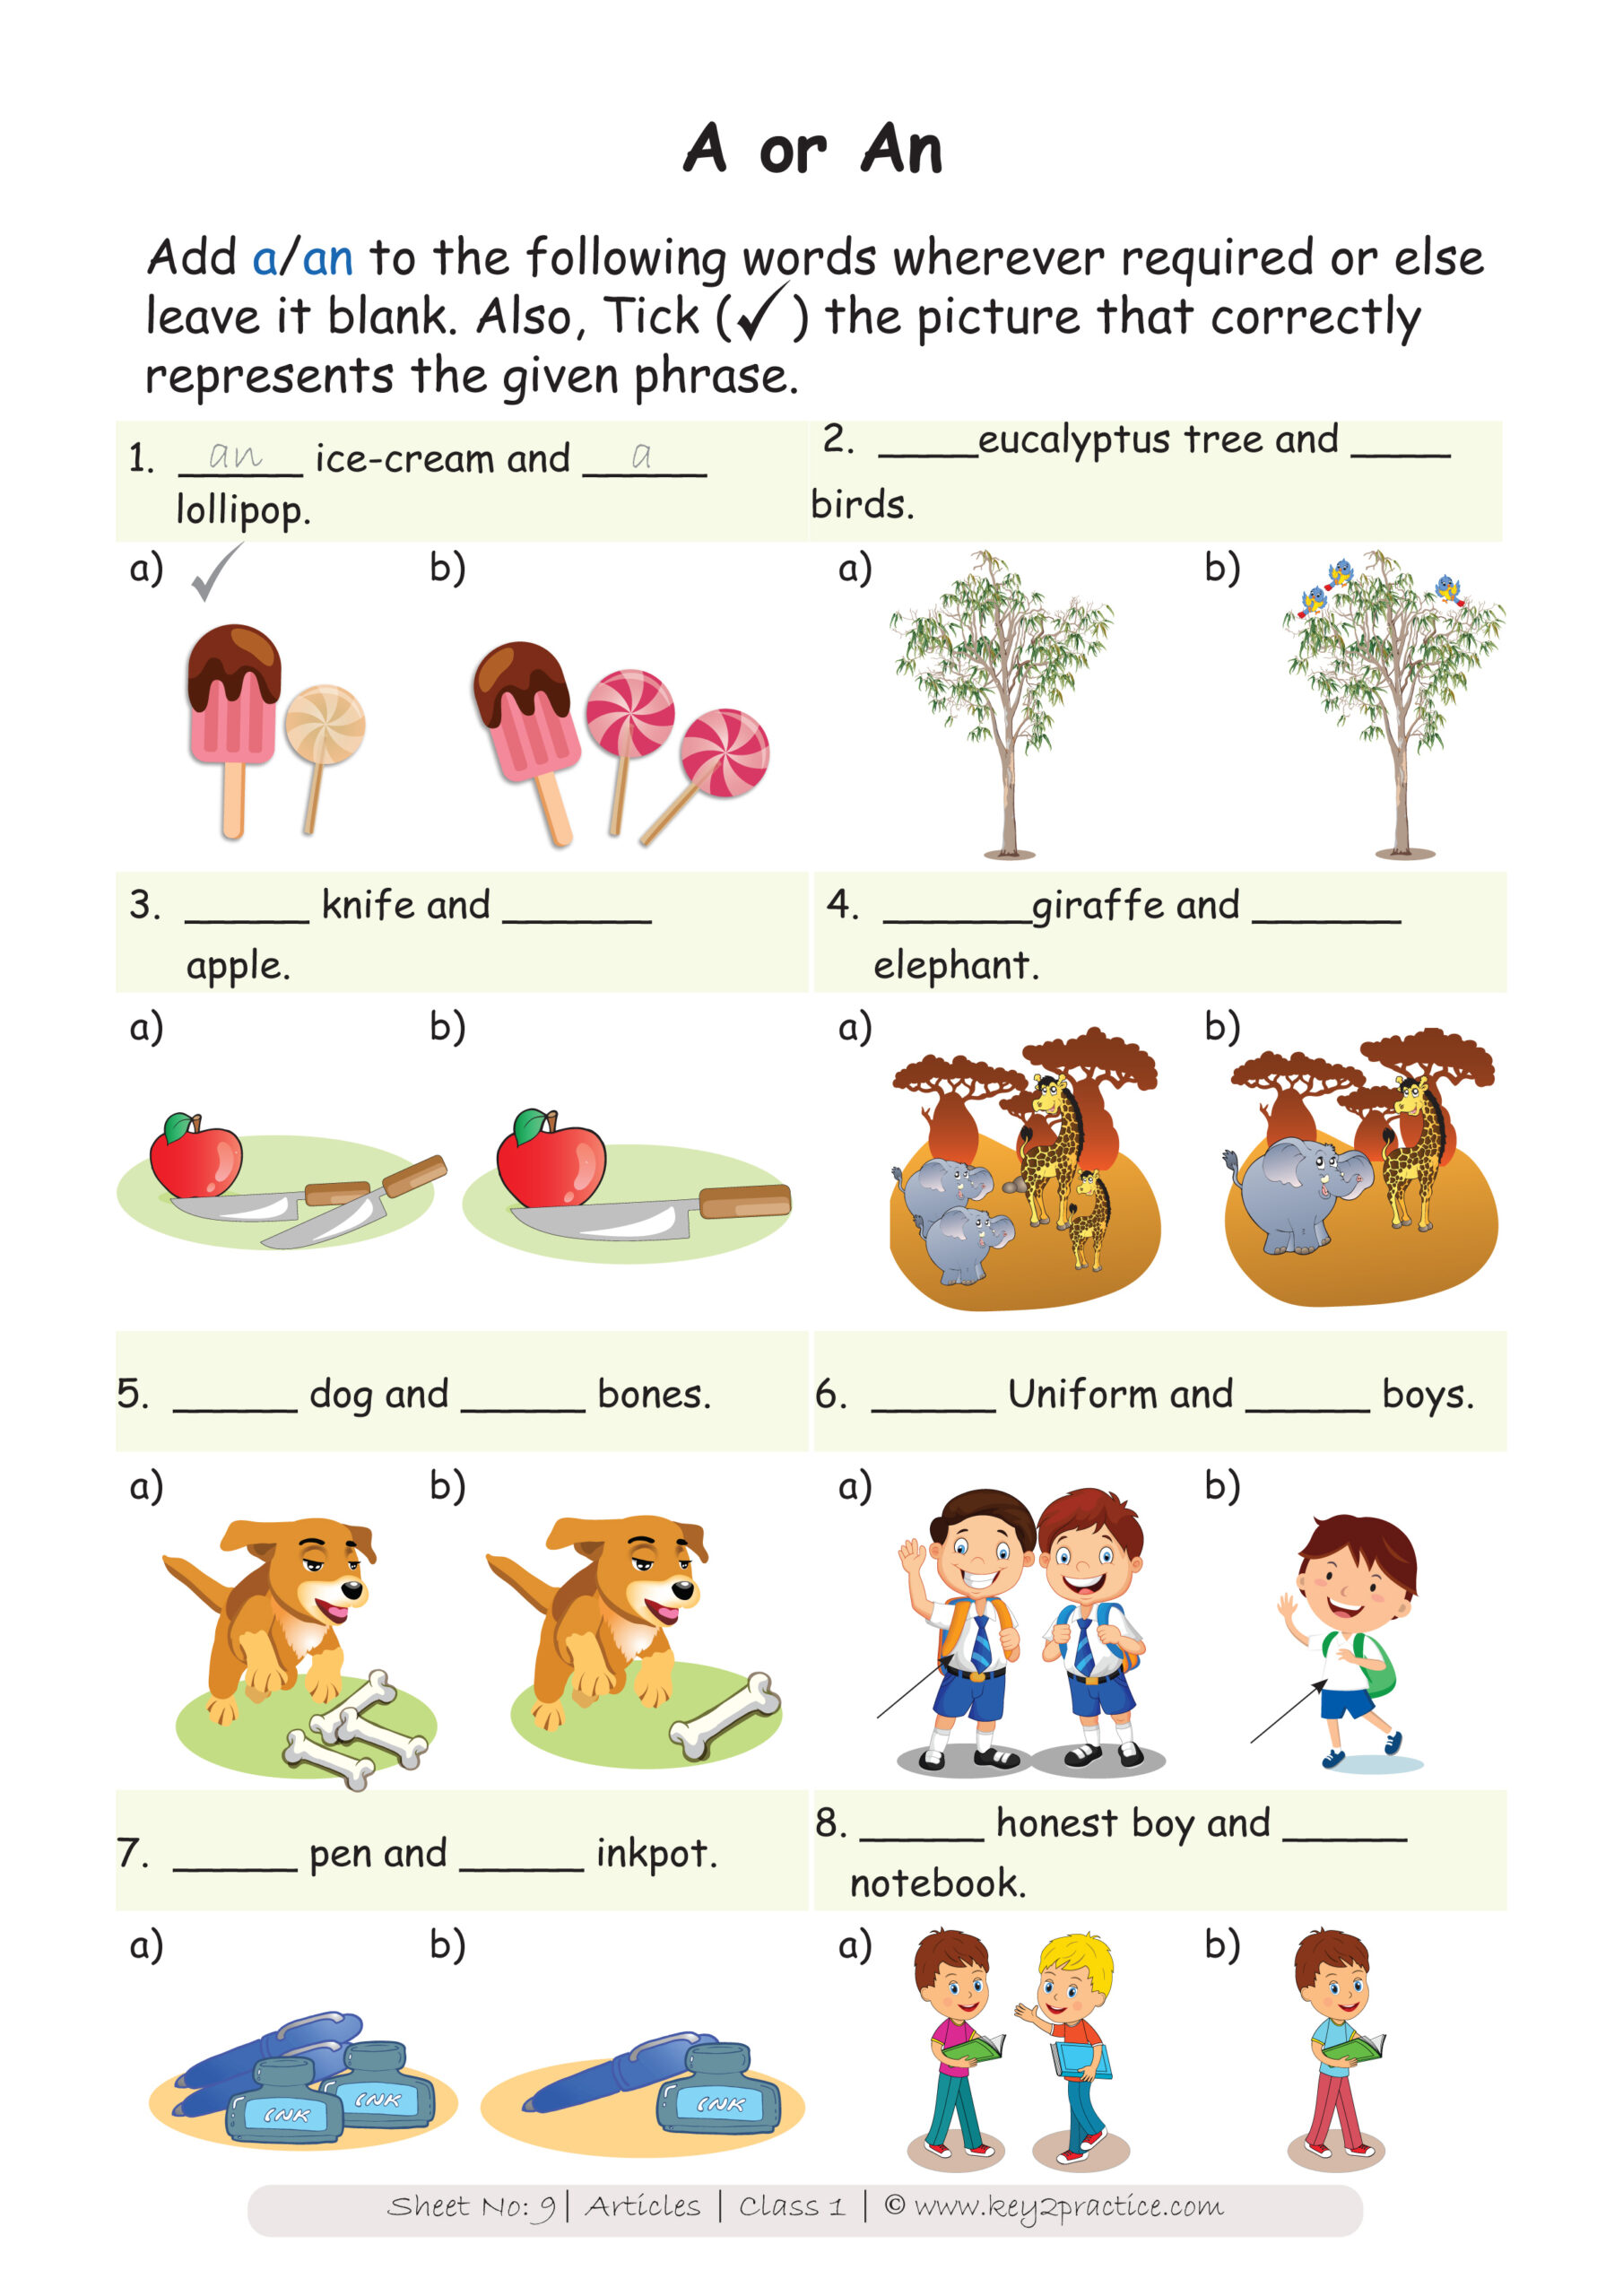 English Grammer Worksheets I Grade 1 Key2practice Workbooks